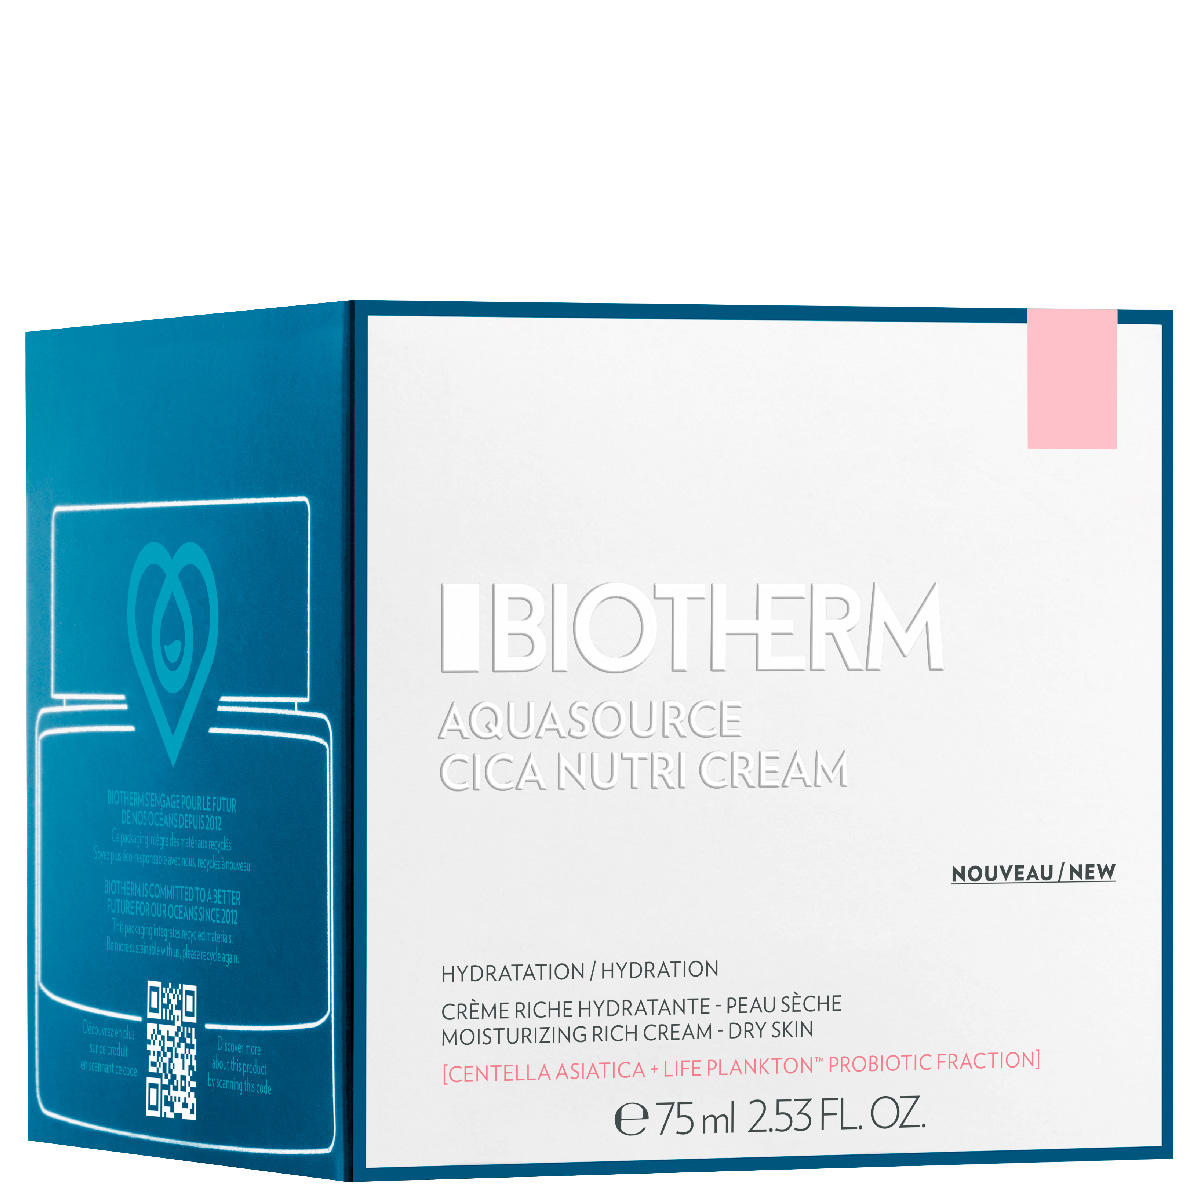 Biotherm Aquasource Cica Nutri Cream 75 ml - 2